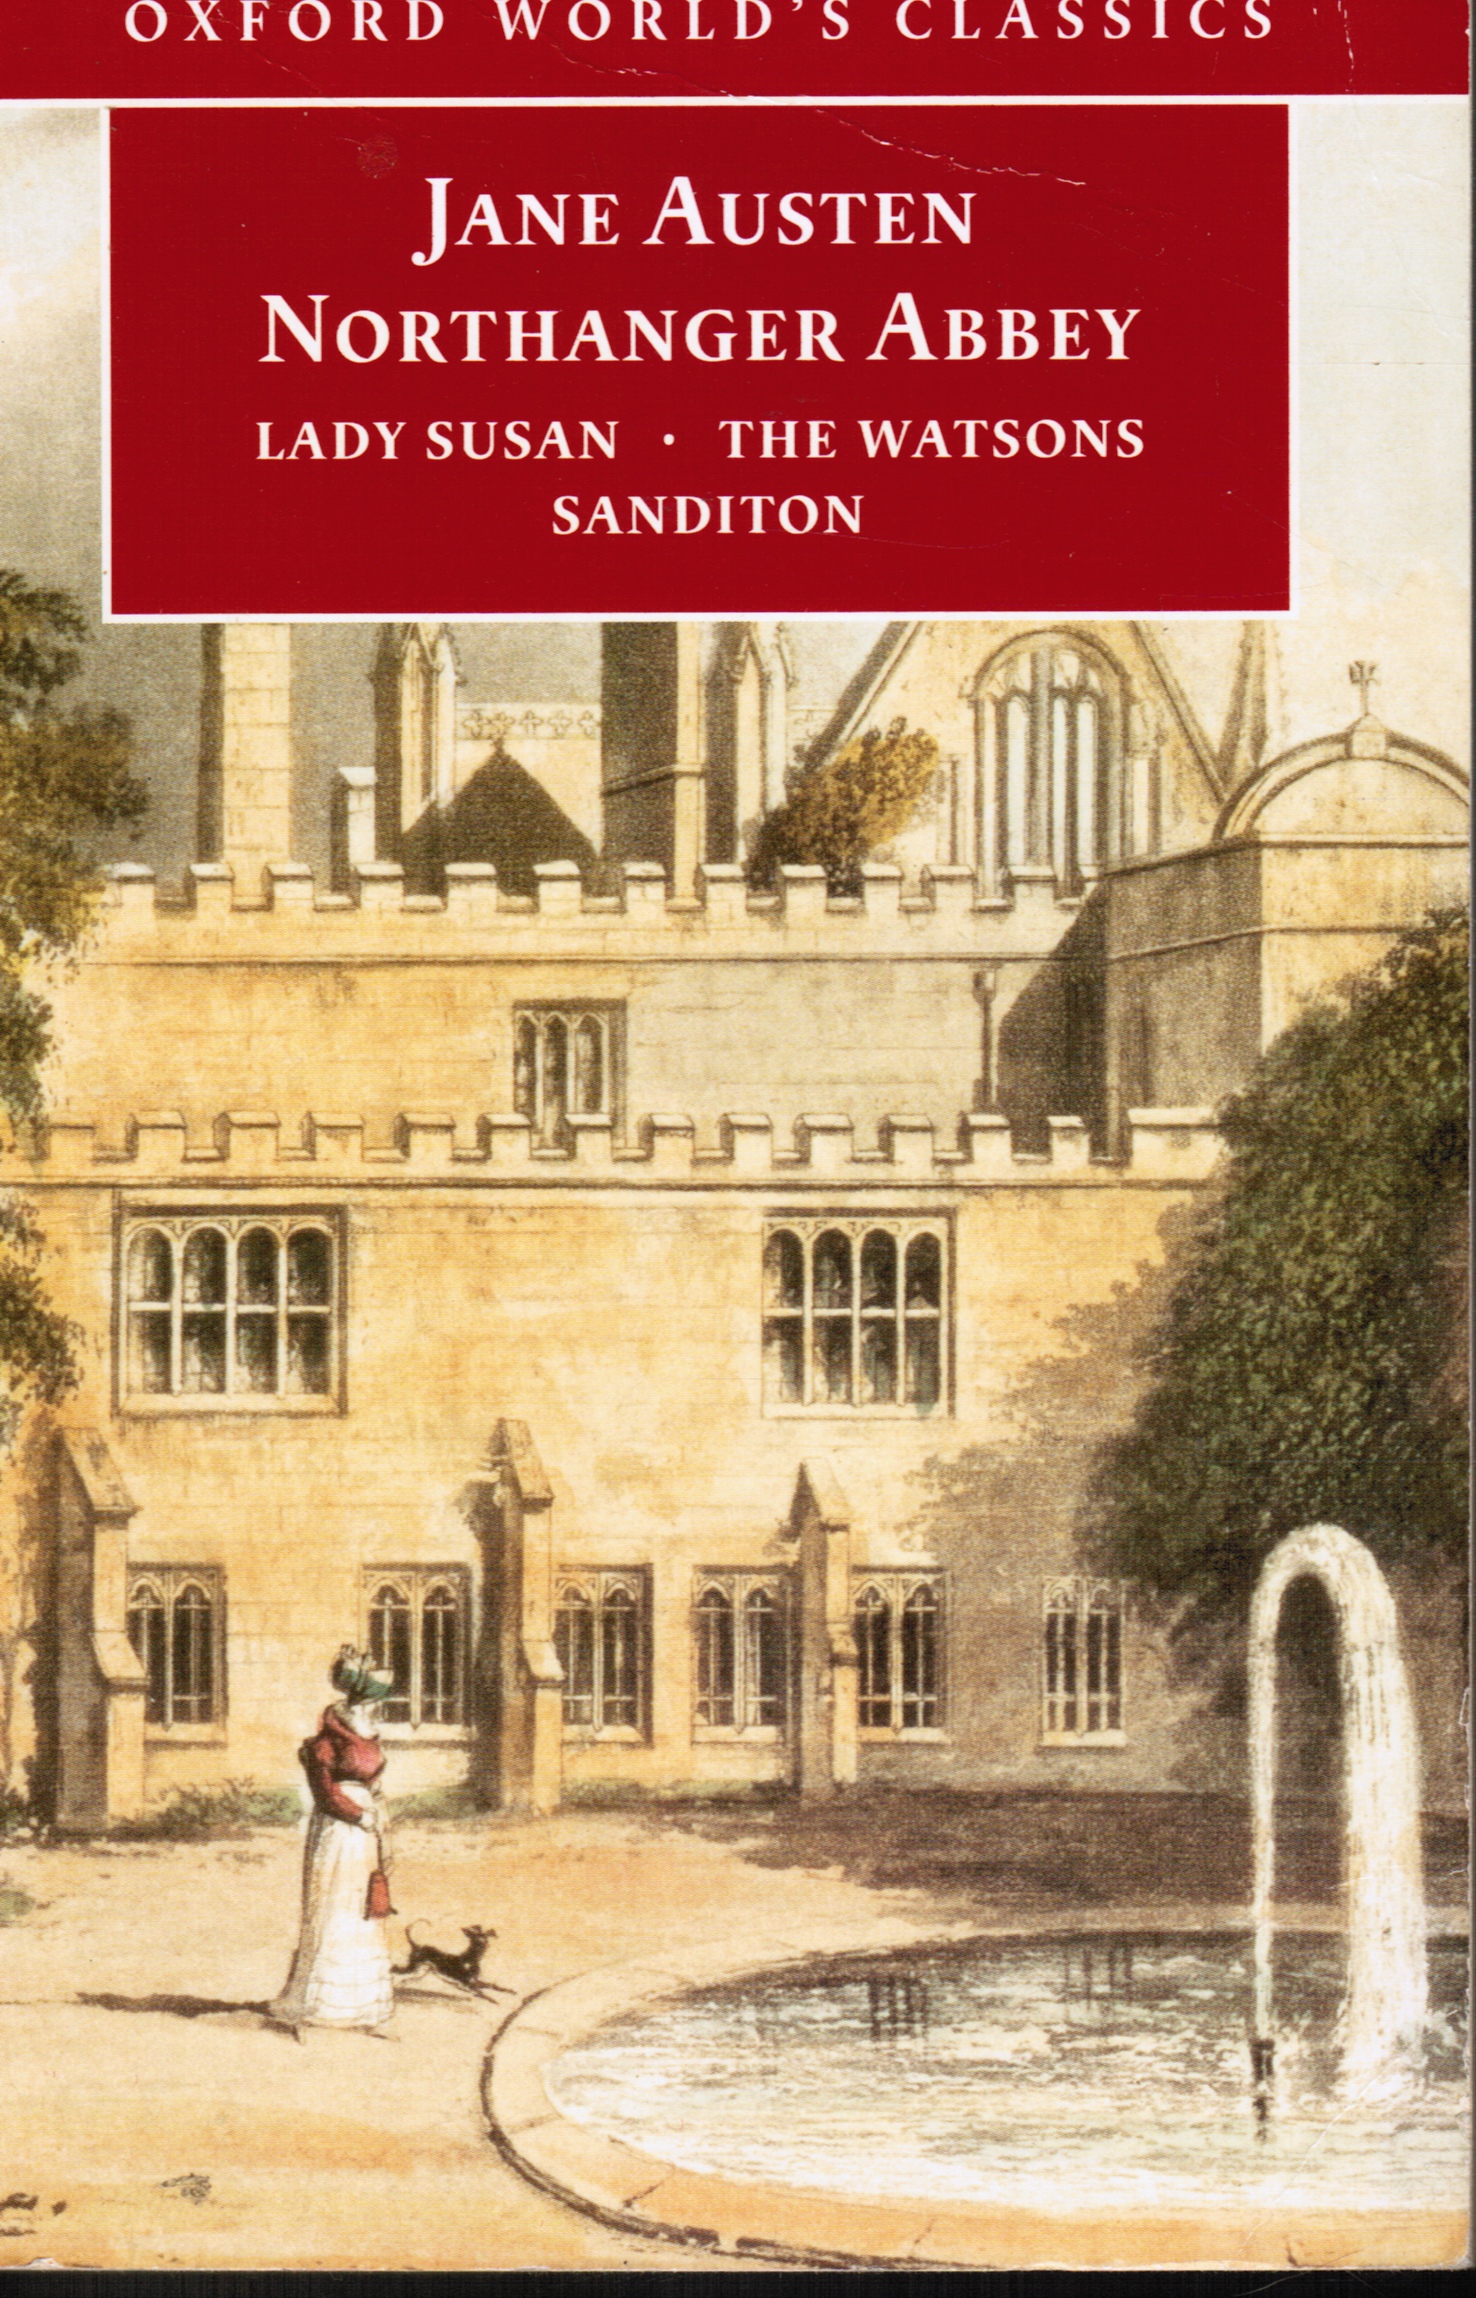 AUSTEN, JANE JAMES KINSLEY, JOHN DAVIE (EDITORS) - Northanger Abbey: Lady Susan, the Watsons, Sanditon